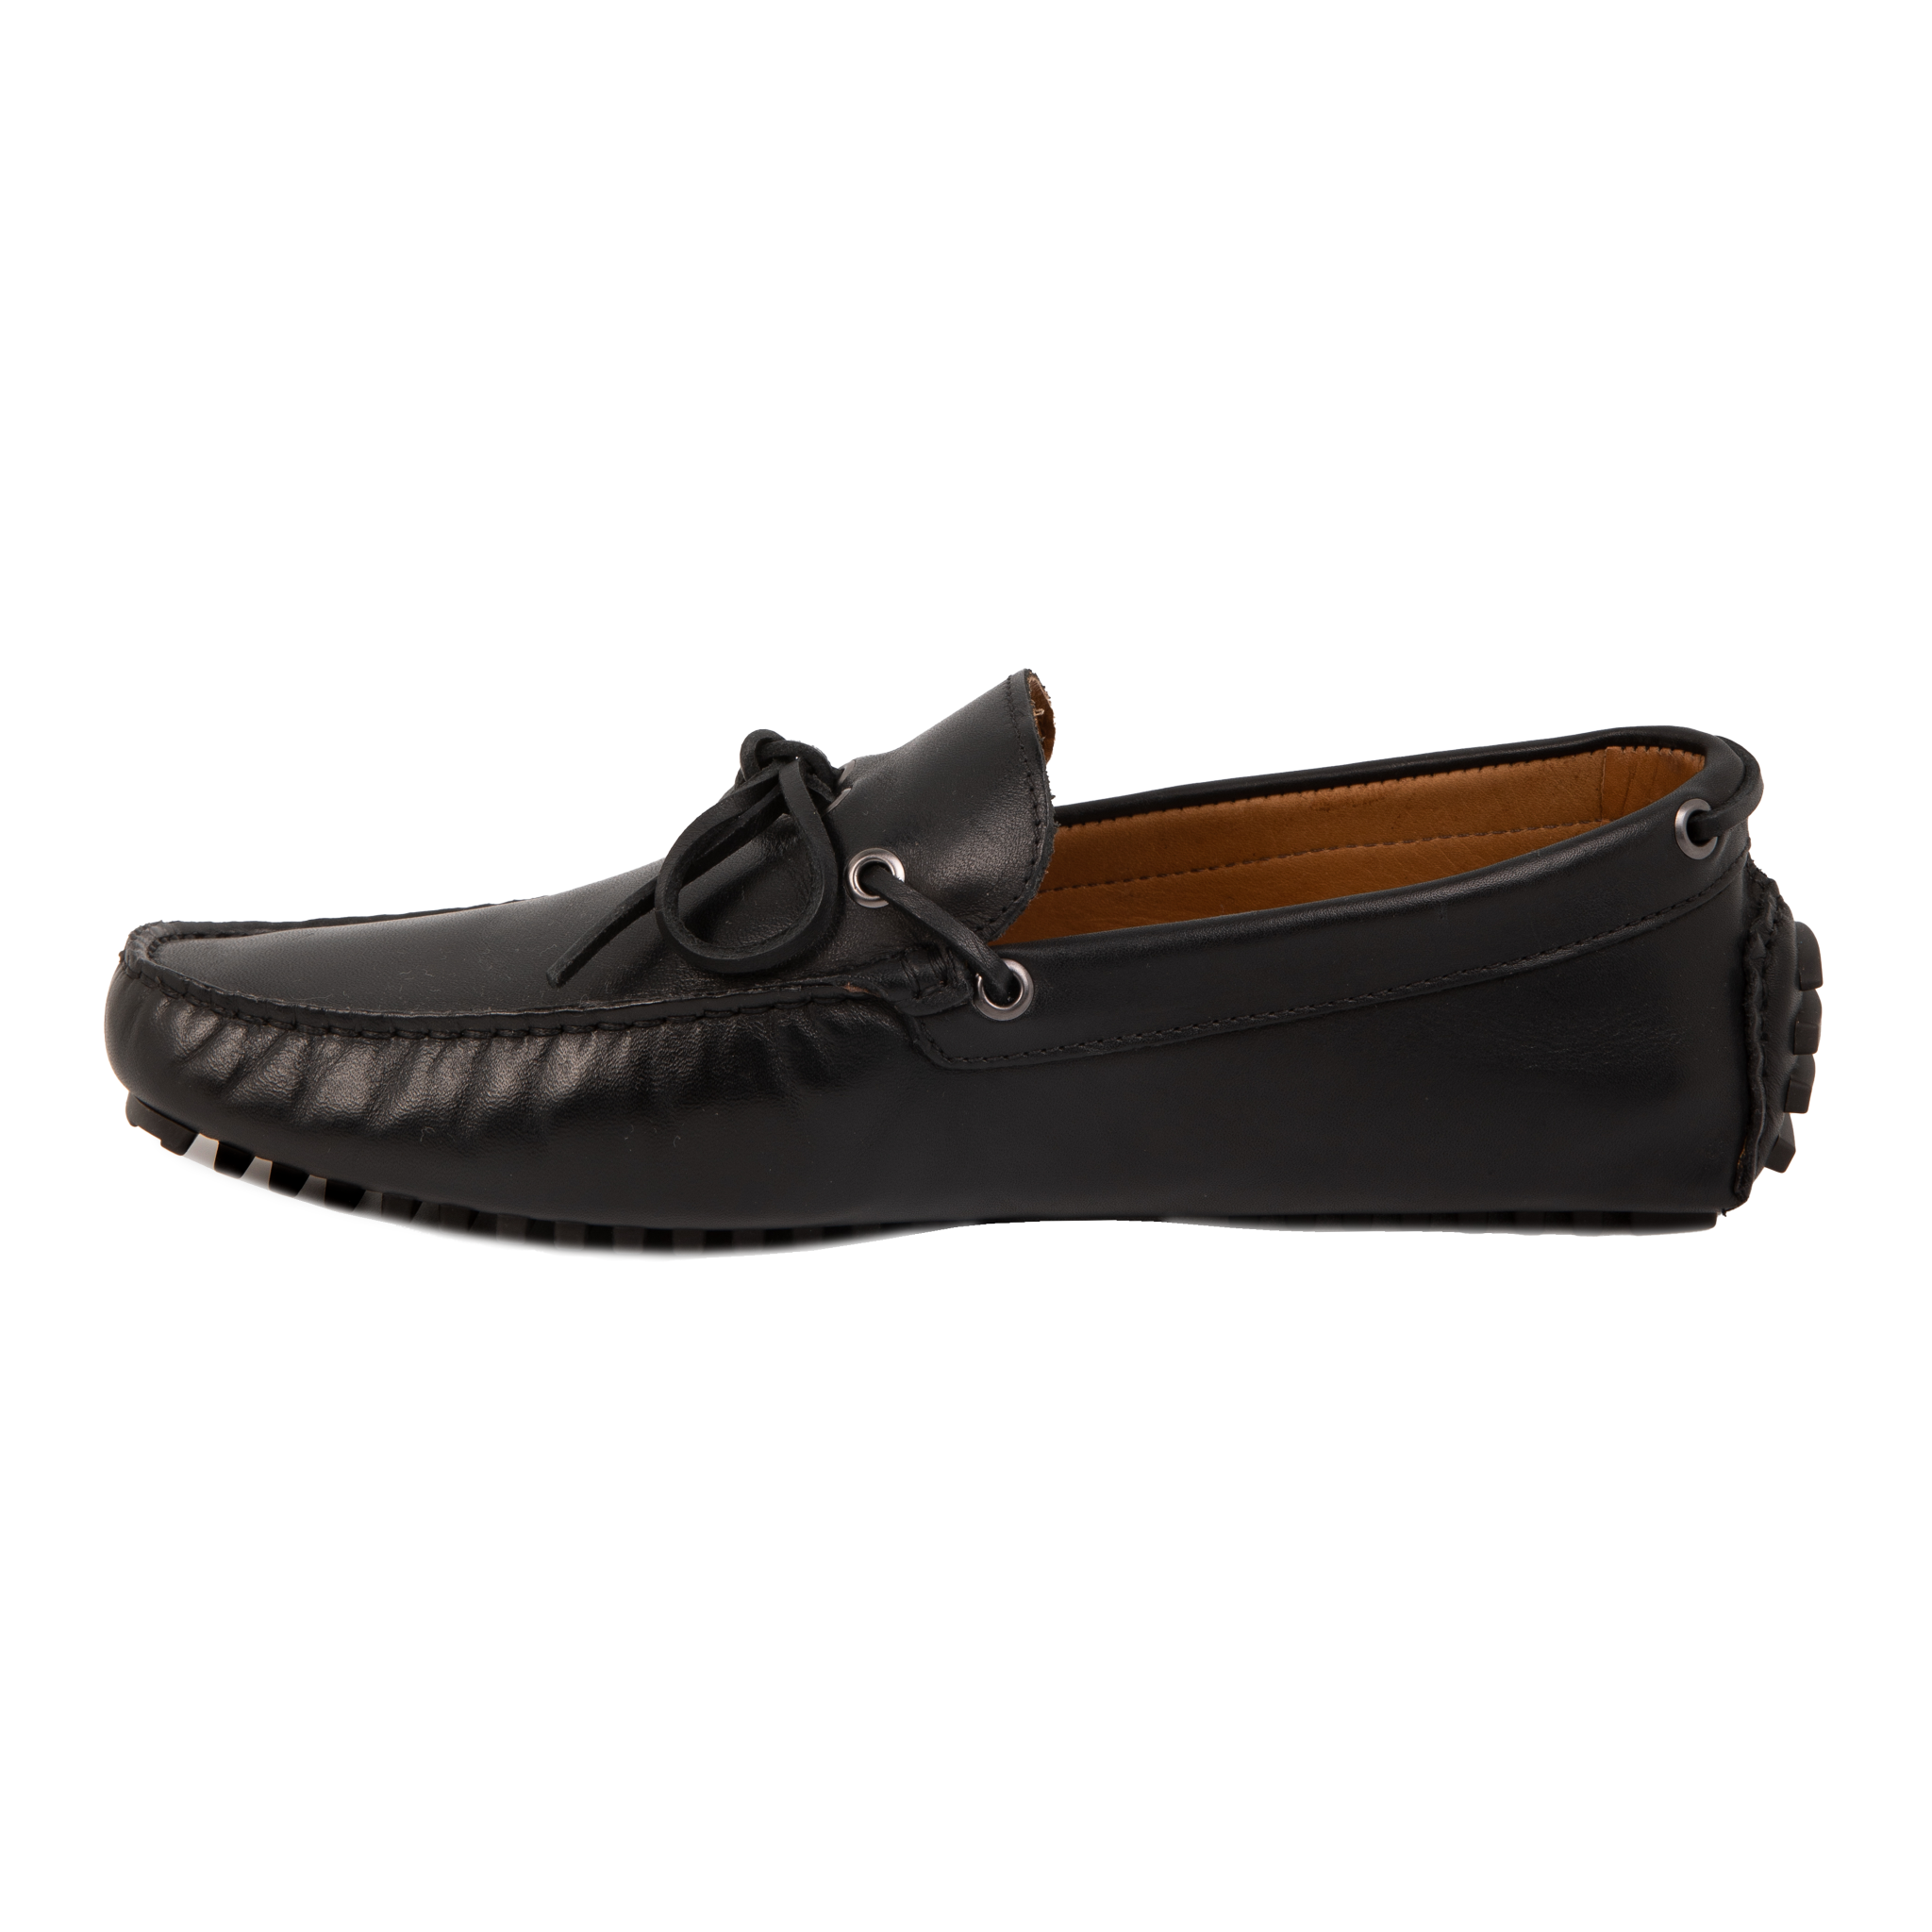 Charlie Boat Shoes - Black Moccasin TARBAY   